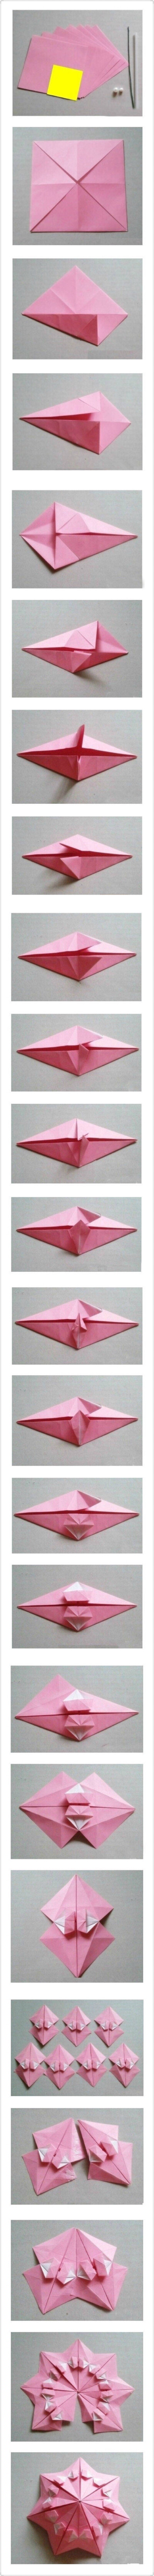 雨伞 折纸